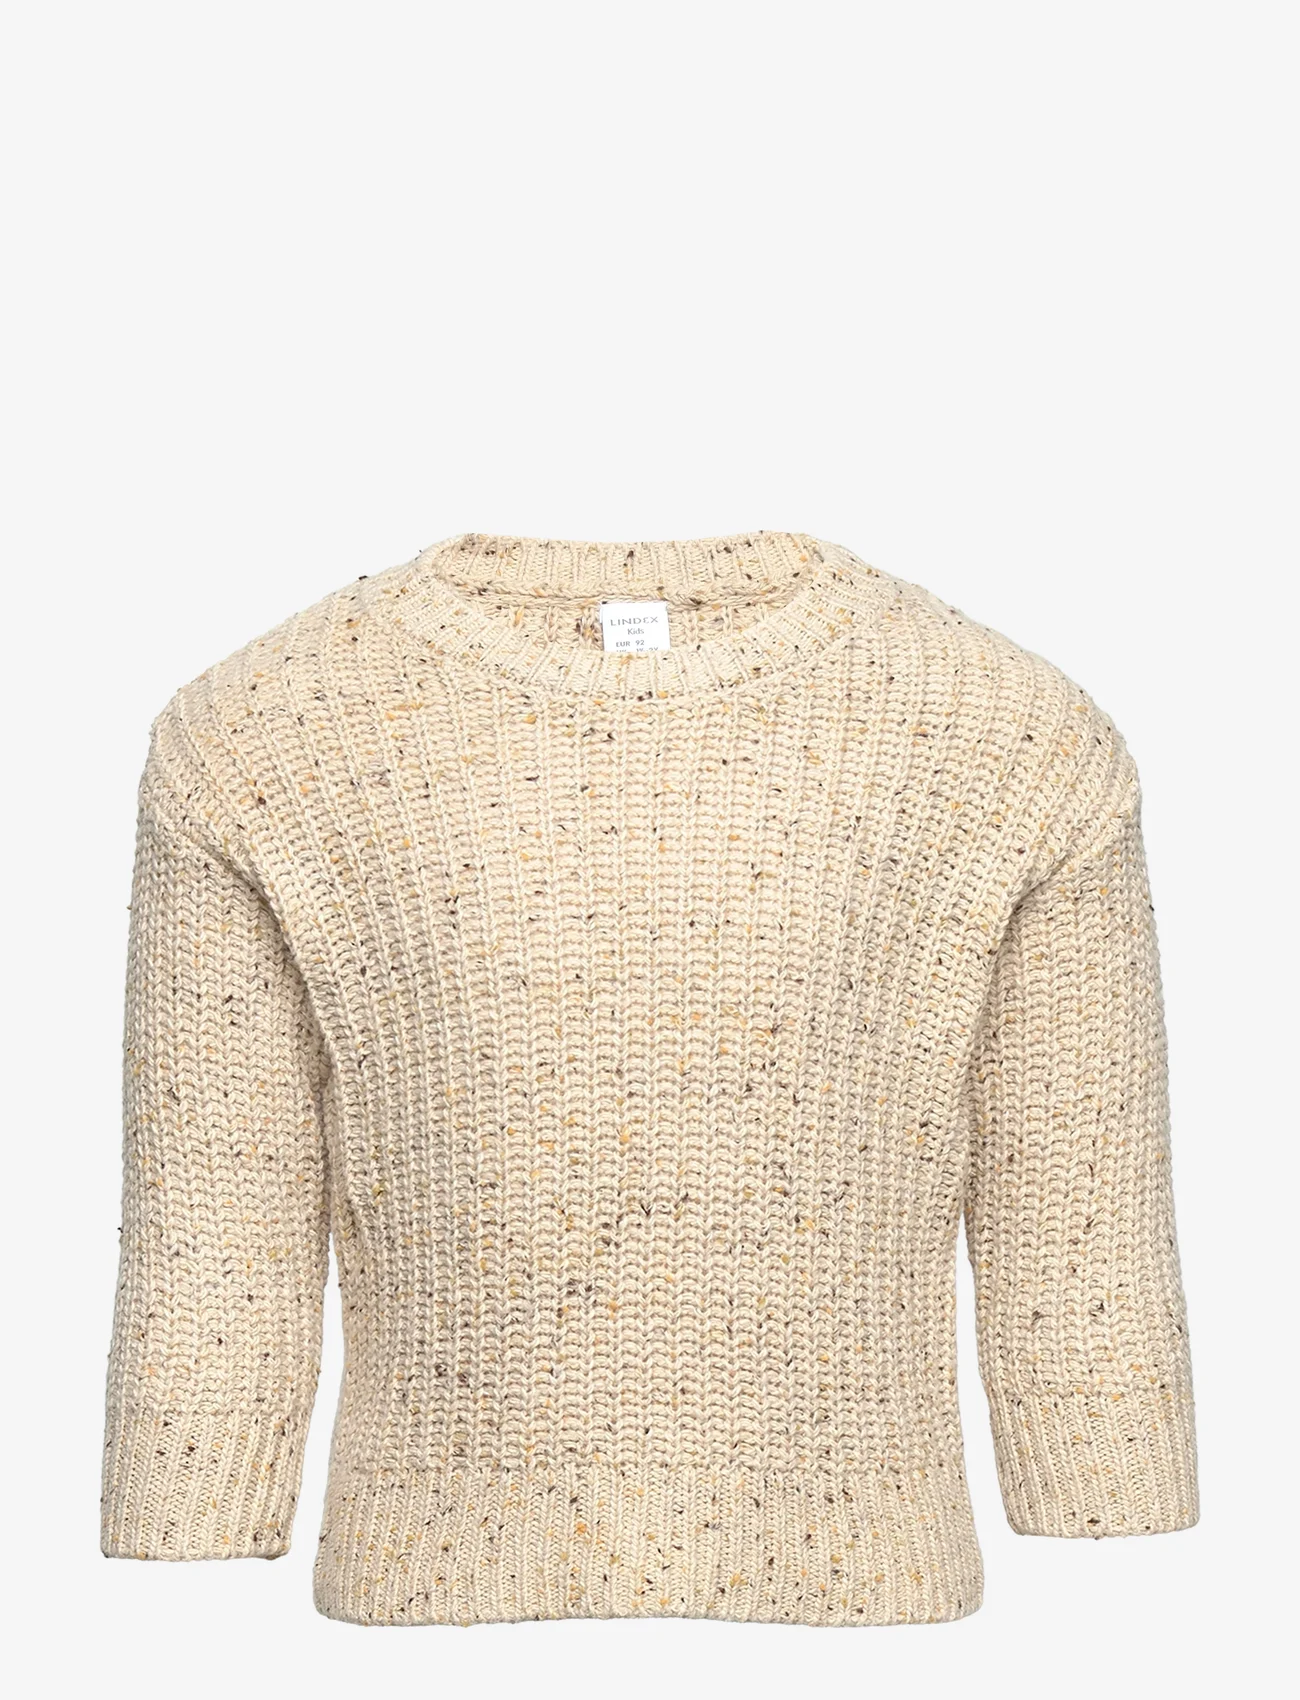 Lindex - Sweater knitted melange - truien - light beige - 0